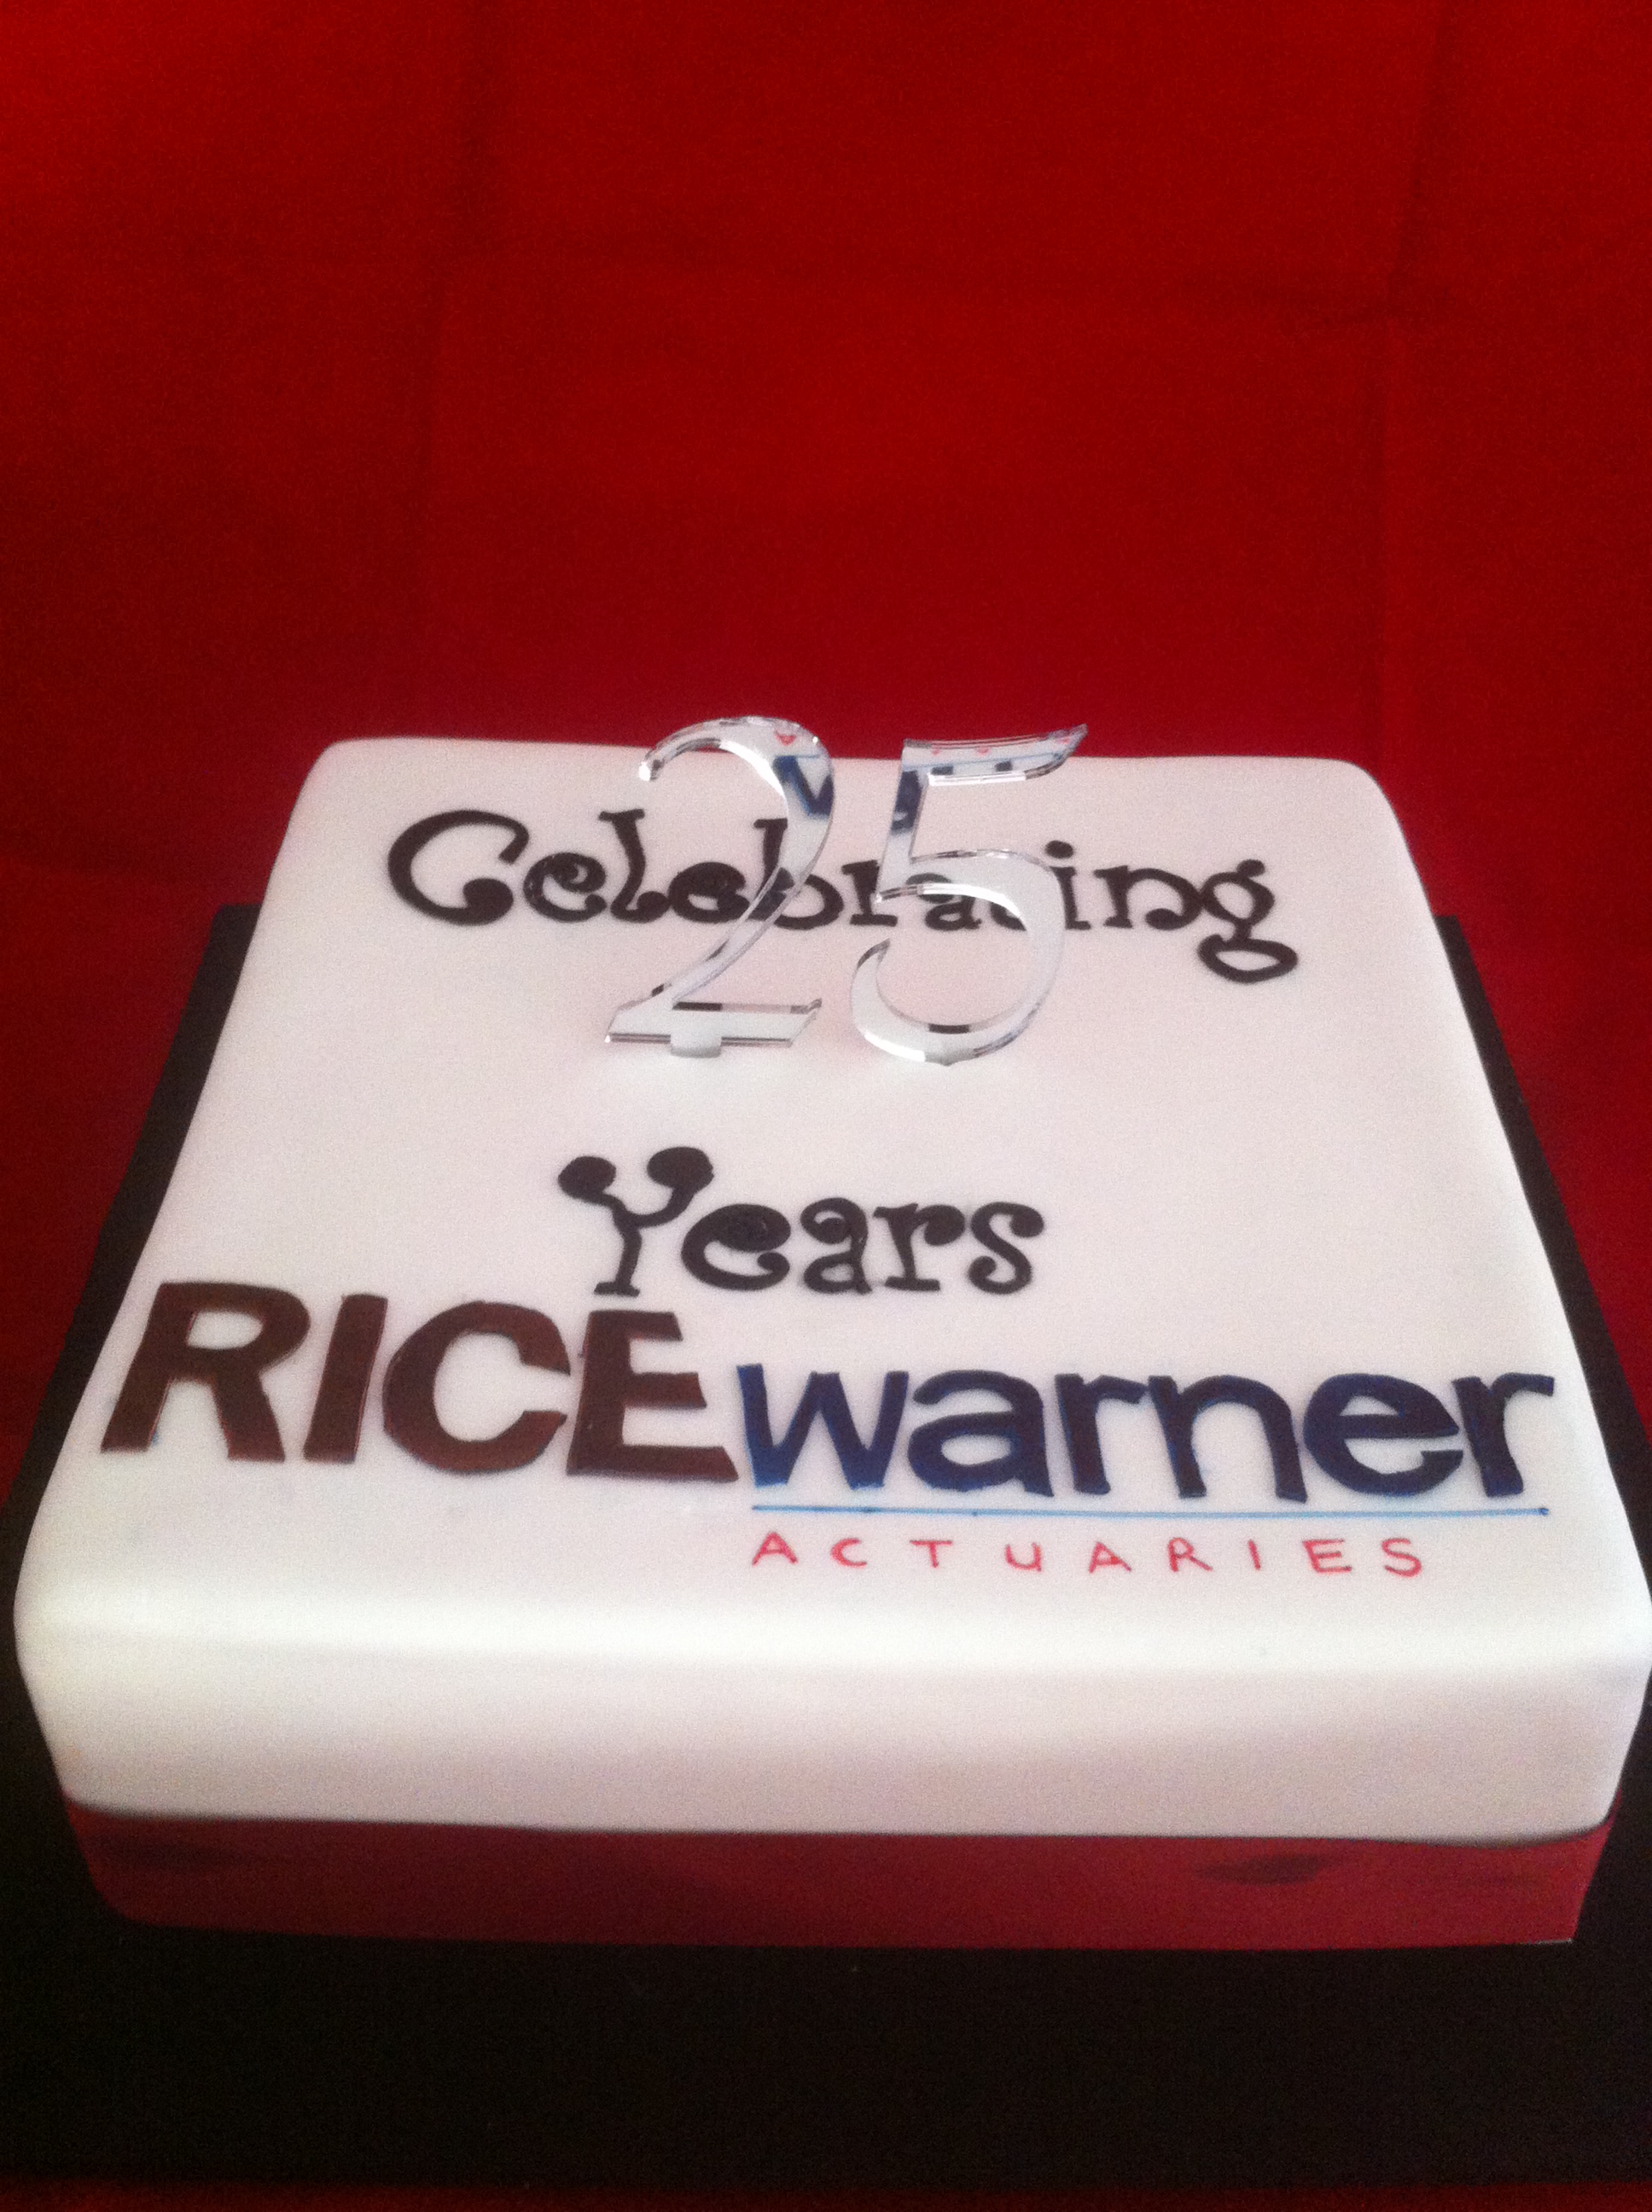 Rice Warner Actuaries Celebrates 25 years.